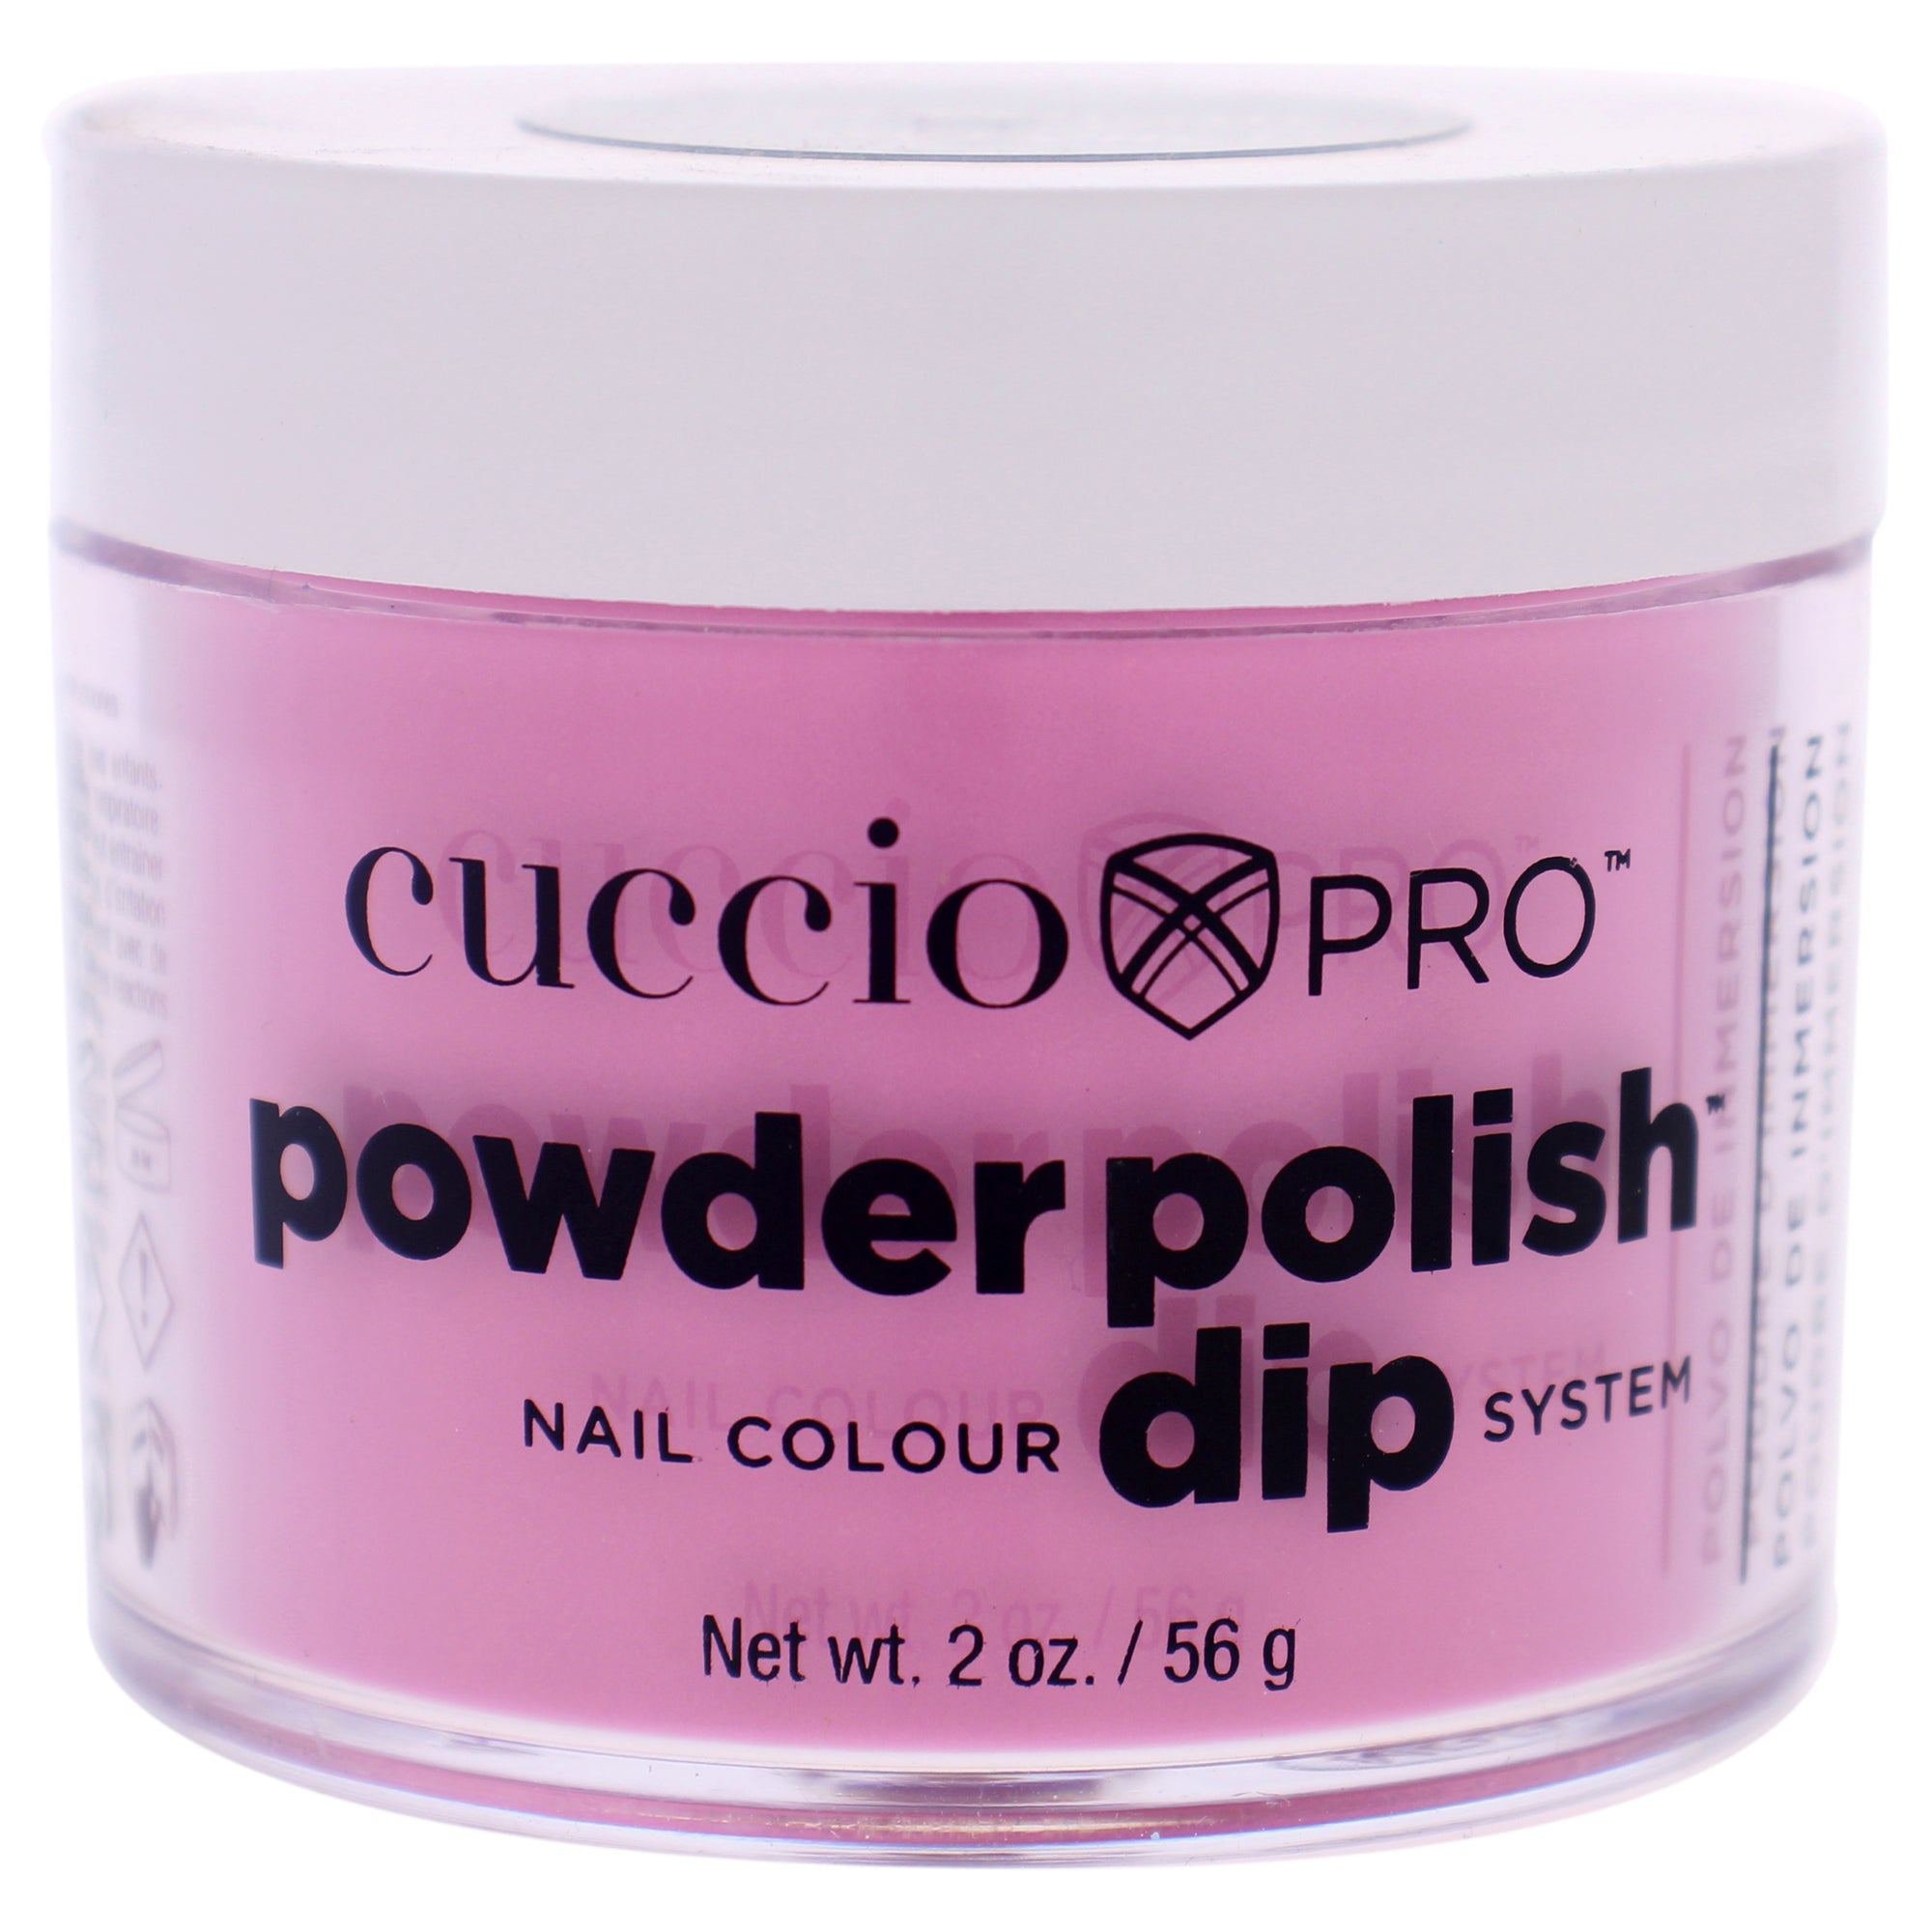 Pro Powder Polish Nail Colour Dip System - Bright Pink by Cuccio Colour for Women - 1.6 oz Nail Powder